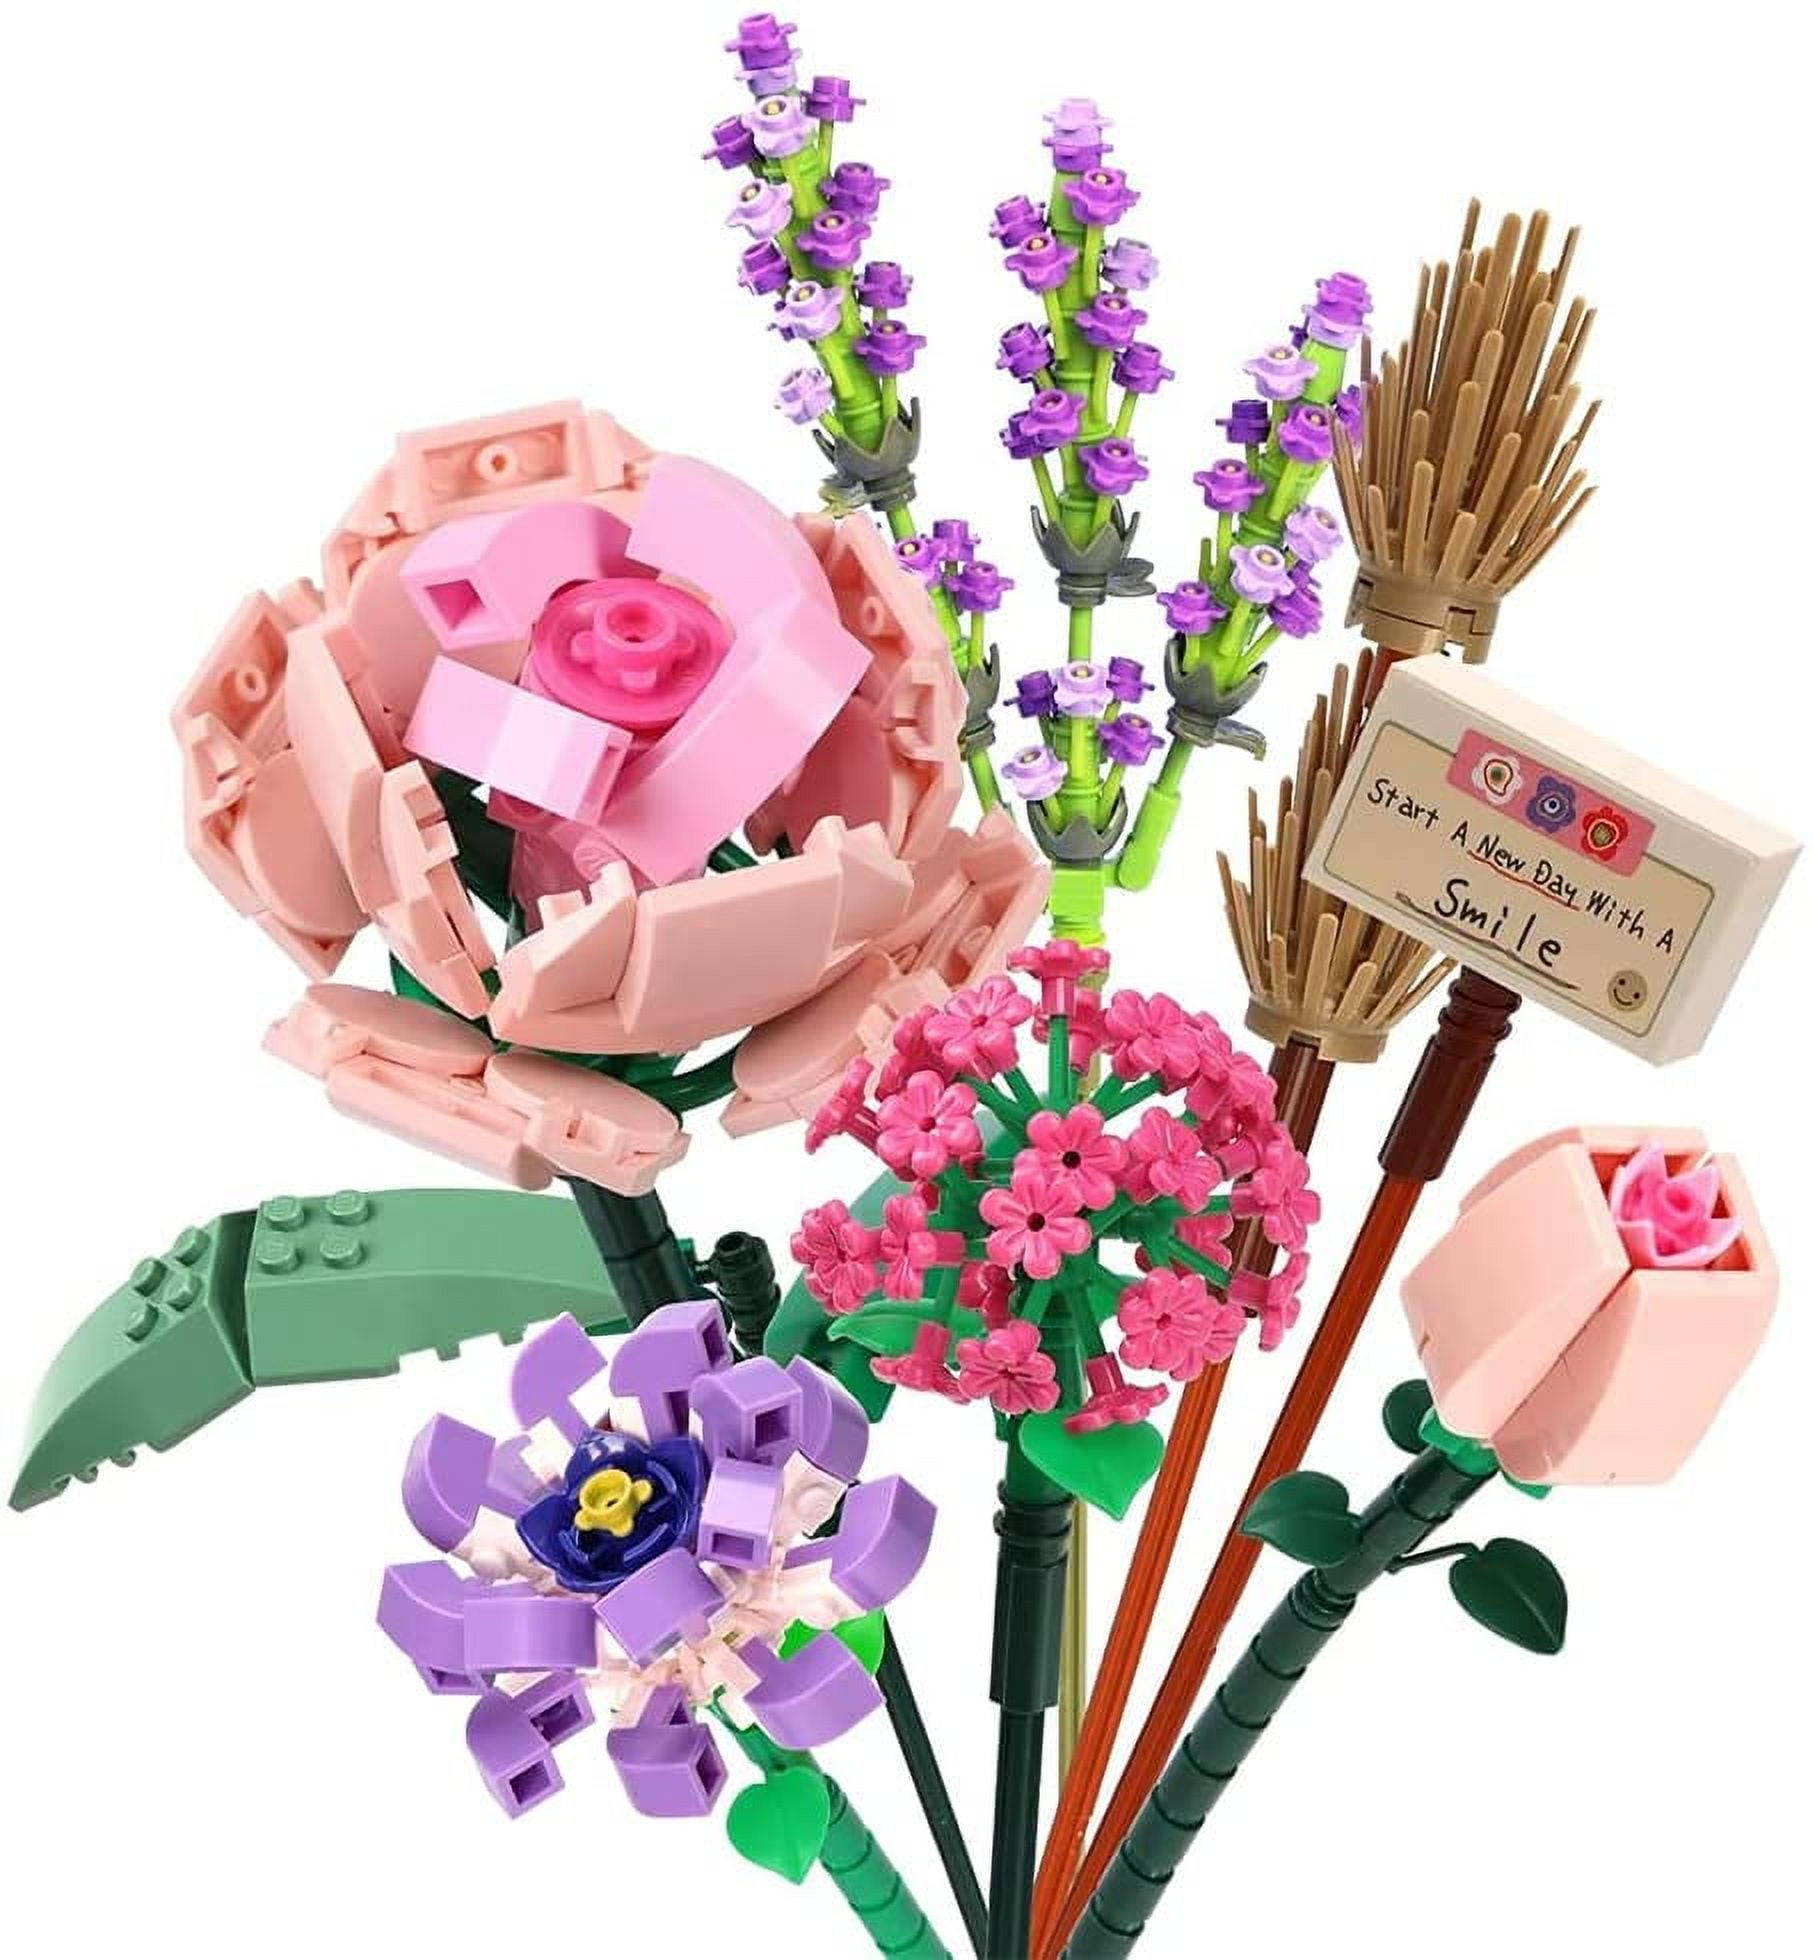  KonHaovF 17 Flowers Bouquet Building Blocks Set, 999PCS  Colorful DIY Artificial Flower Building Kit for Home Decoration Gifts,  Botanical Collection Flower Bouquet Toy : Toys & Games